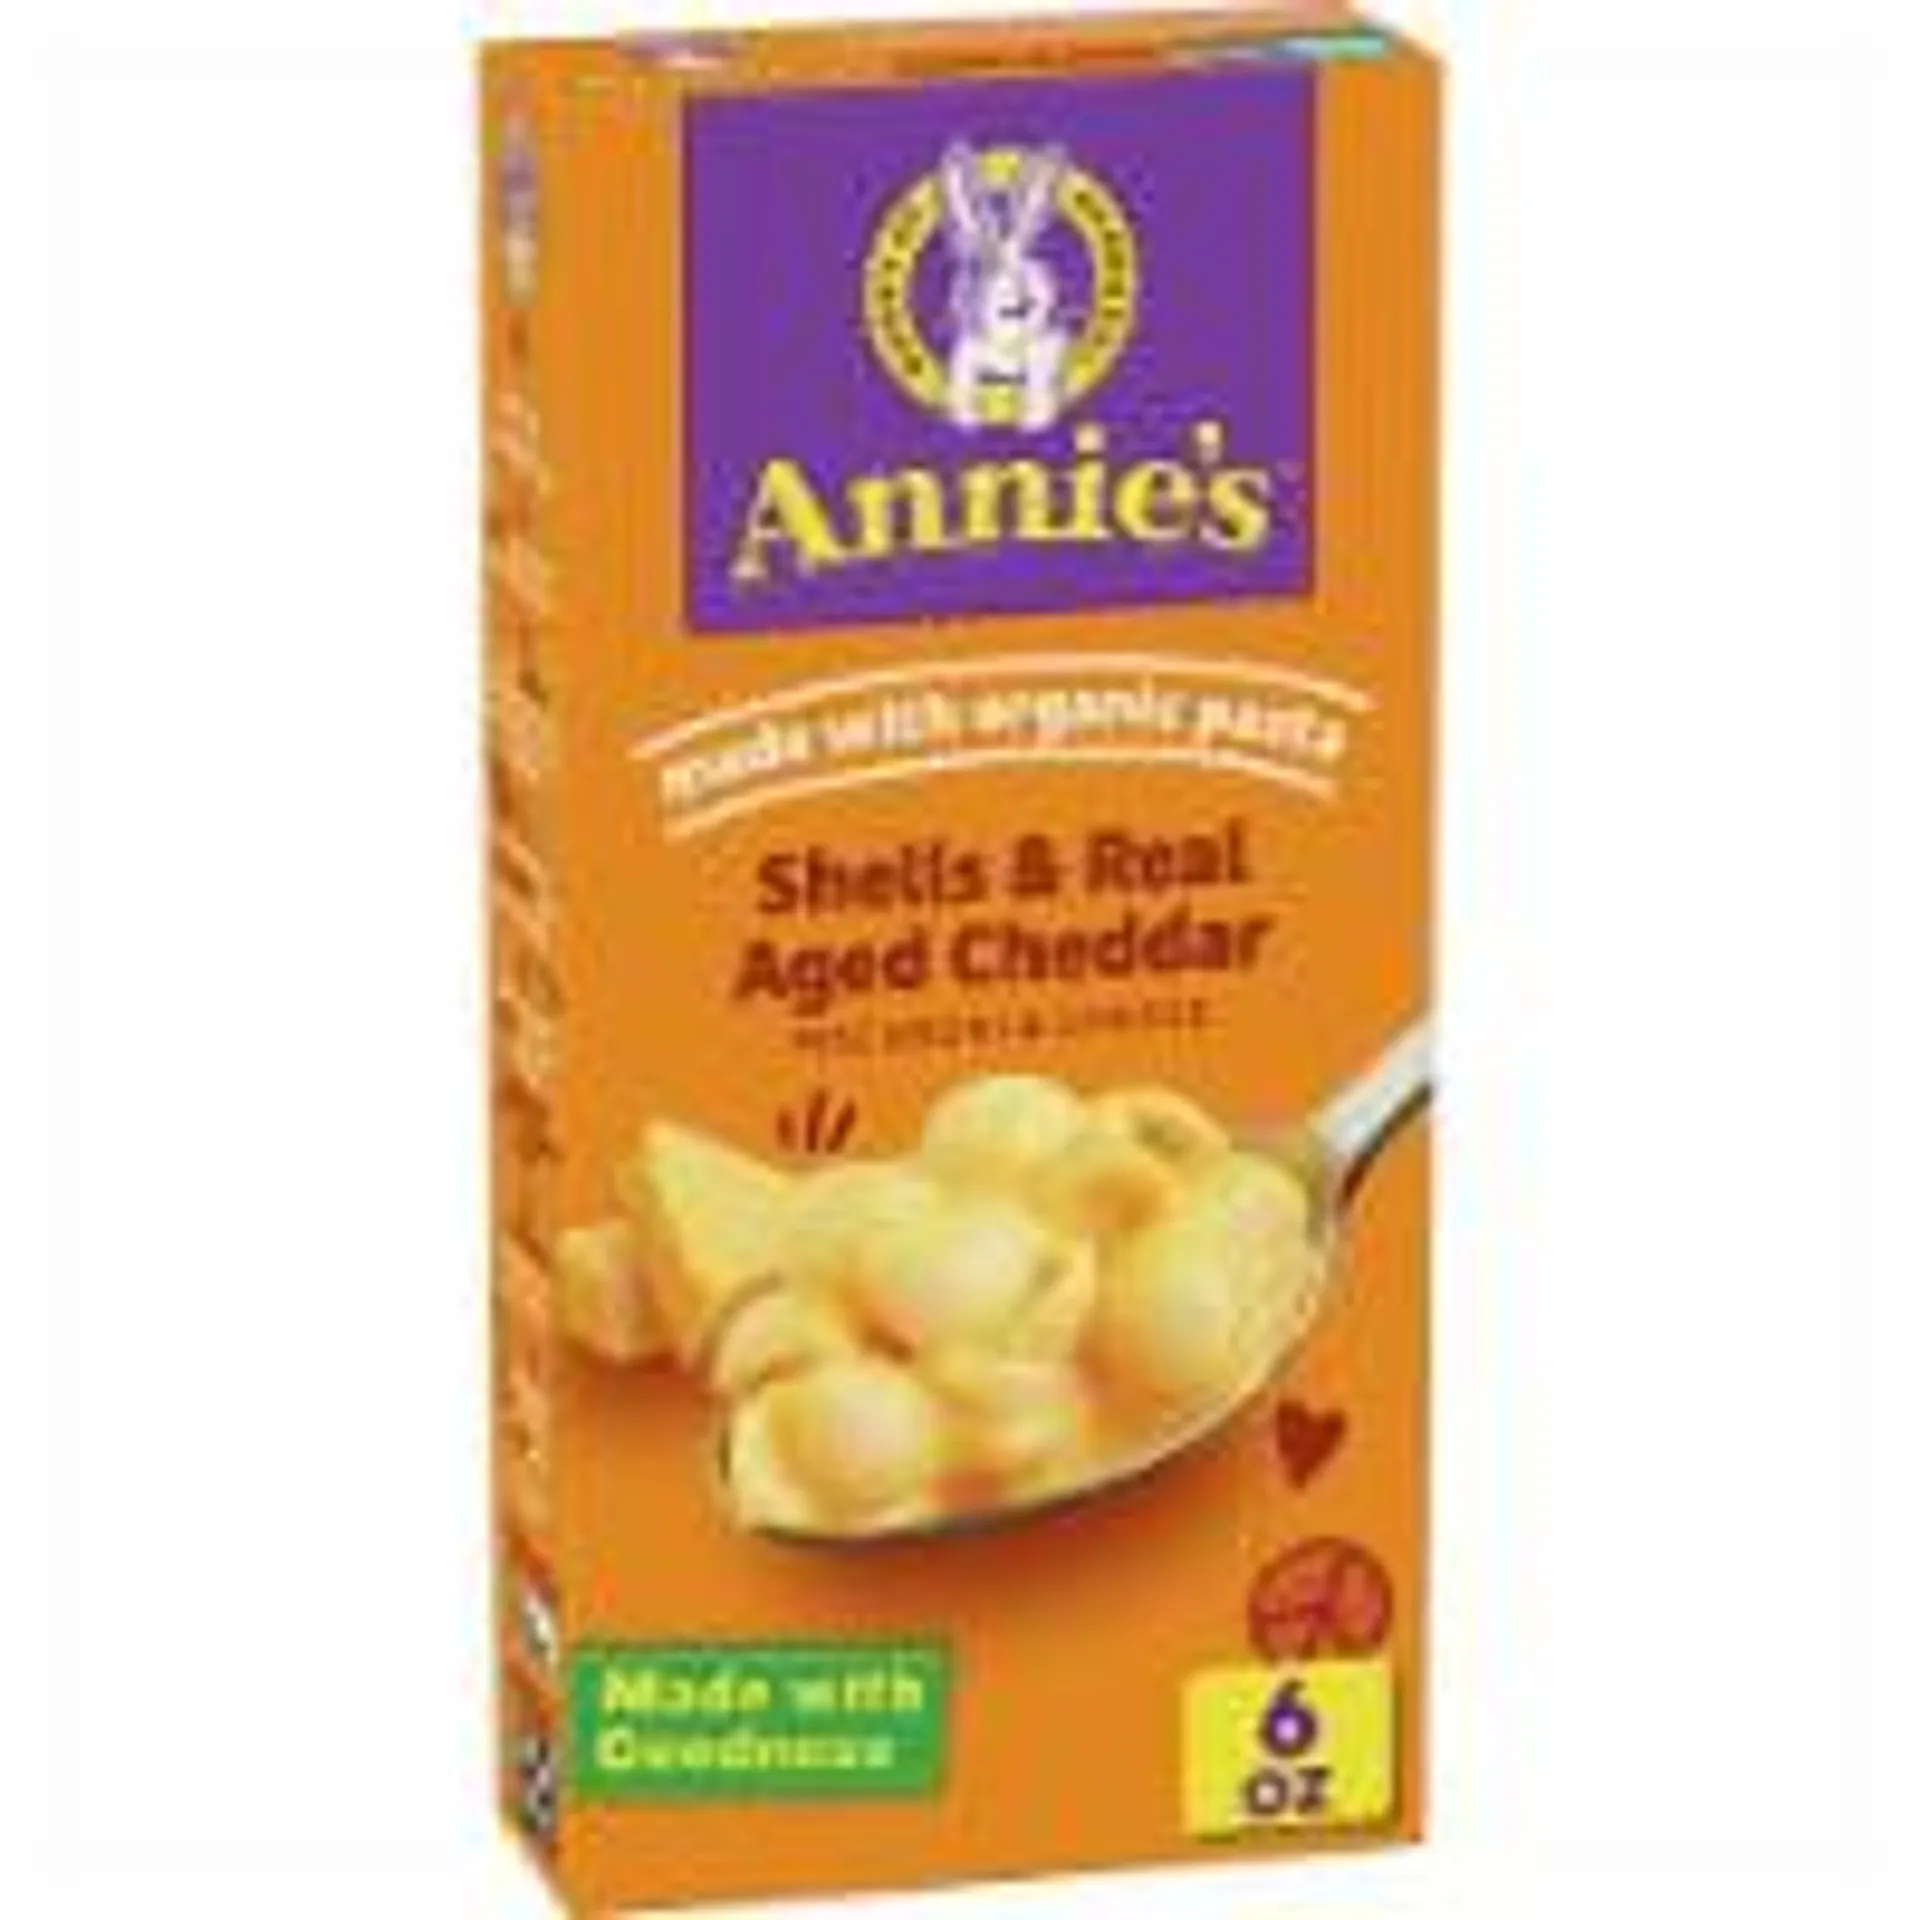 Annie’s Organic Real Aged Cheddar Shells Mac N Cheese Macaroni and Cheese Dinner